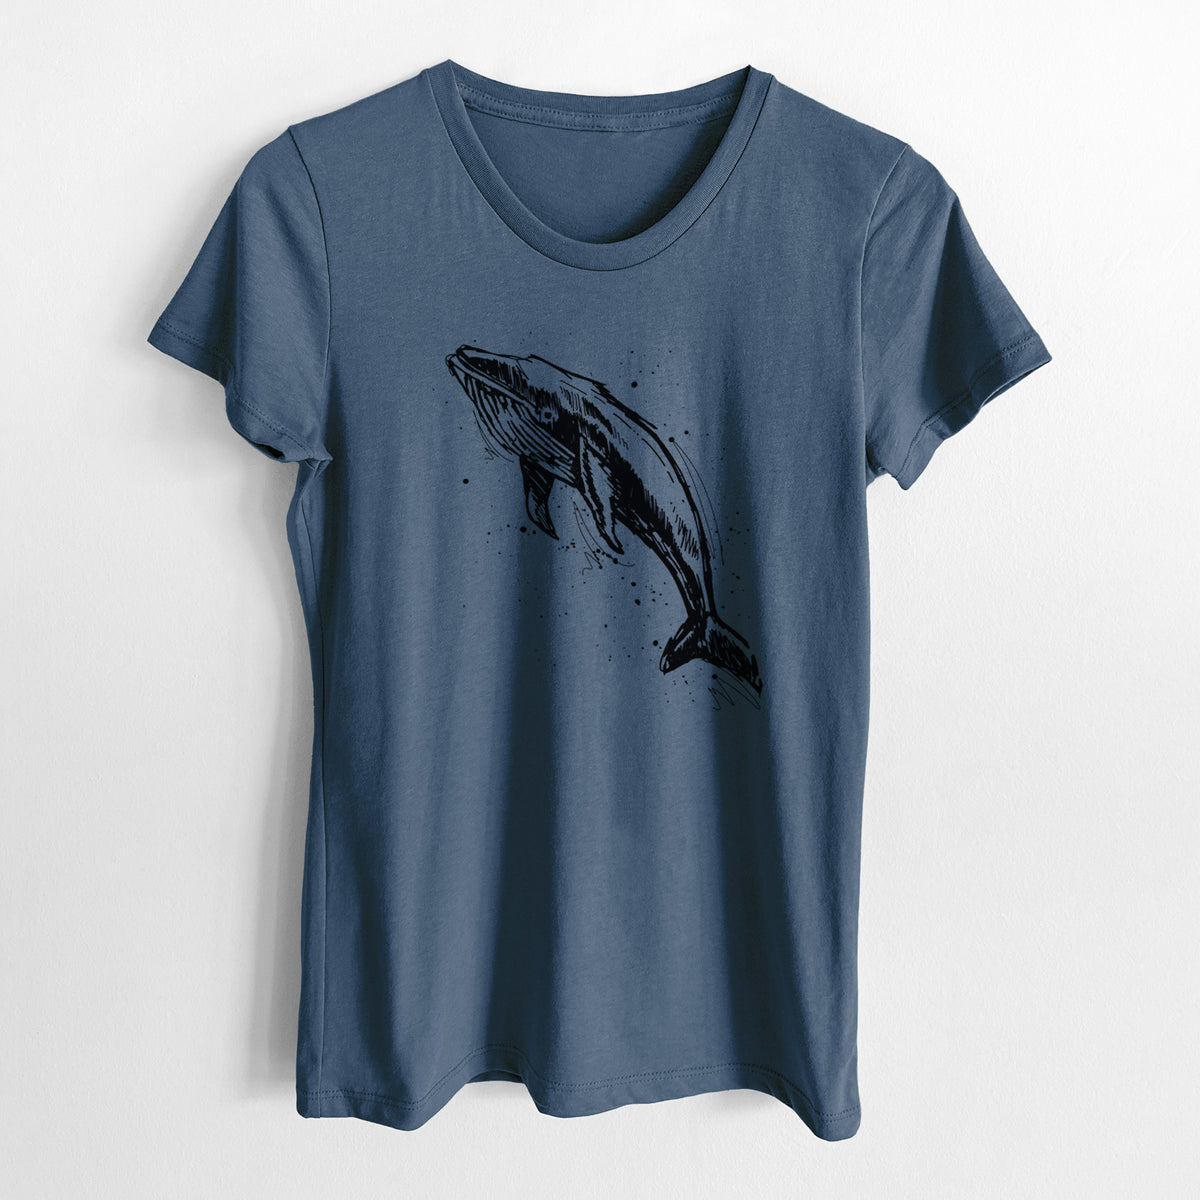 Humpback Whale - Women&#39;s Crewneck - Made in USA - 100% Organic Cotton